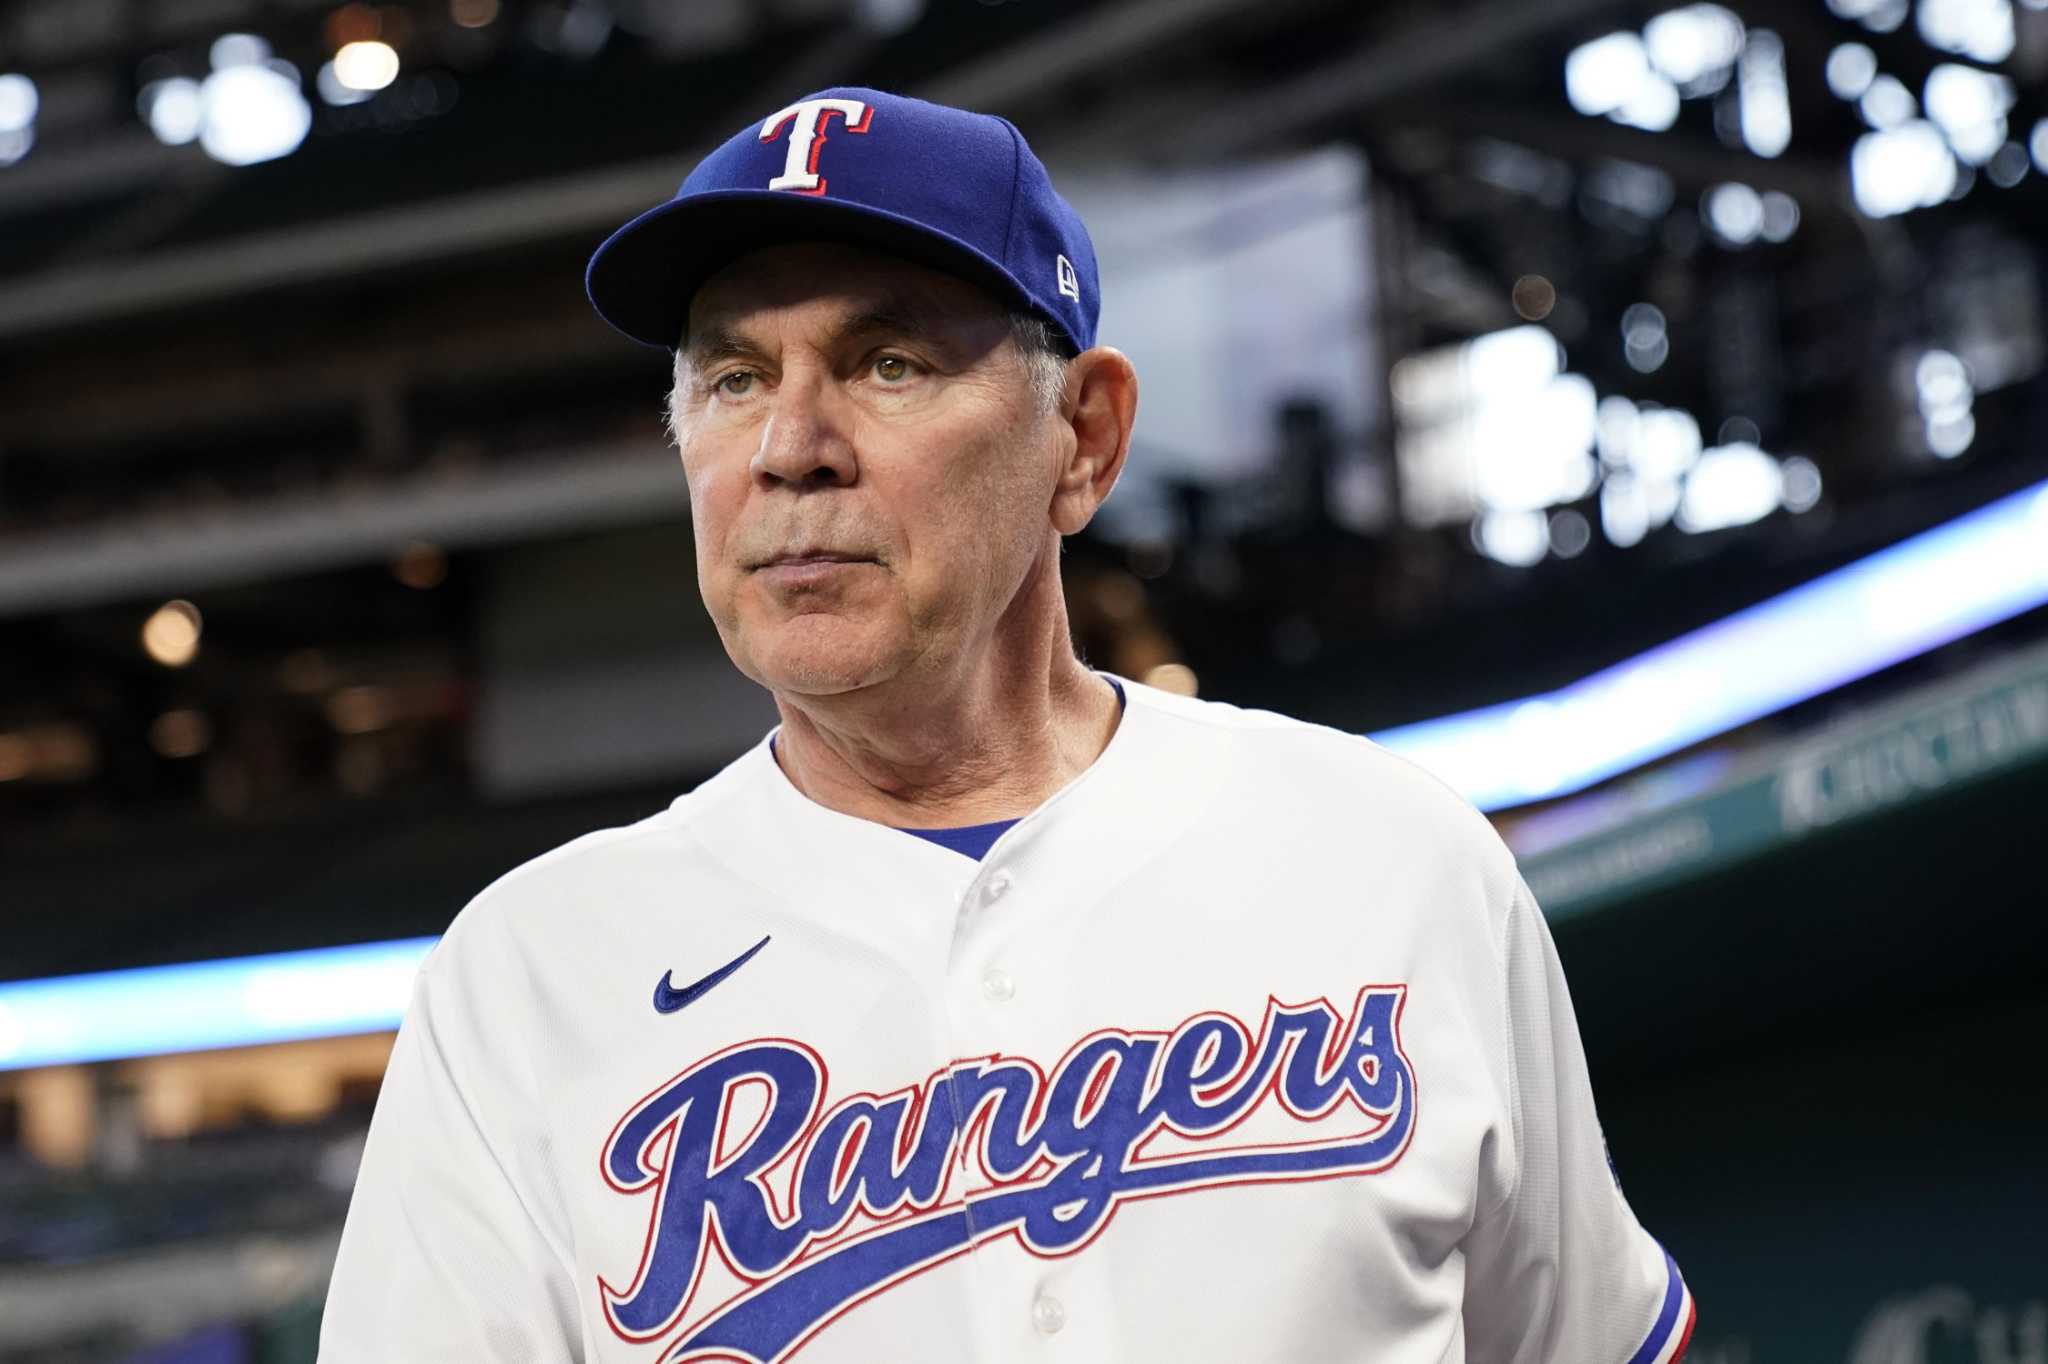 Bochy's Texas Rangers beat his former Giants again, 9-3